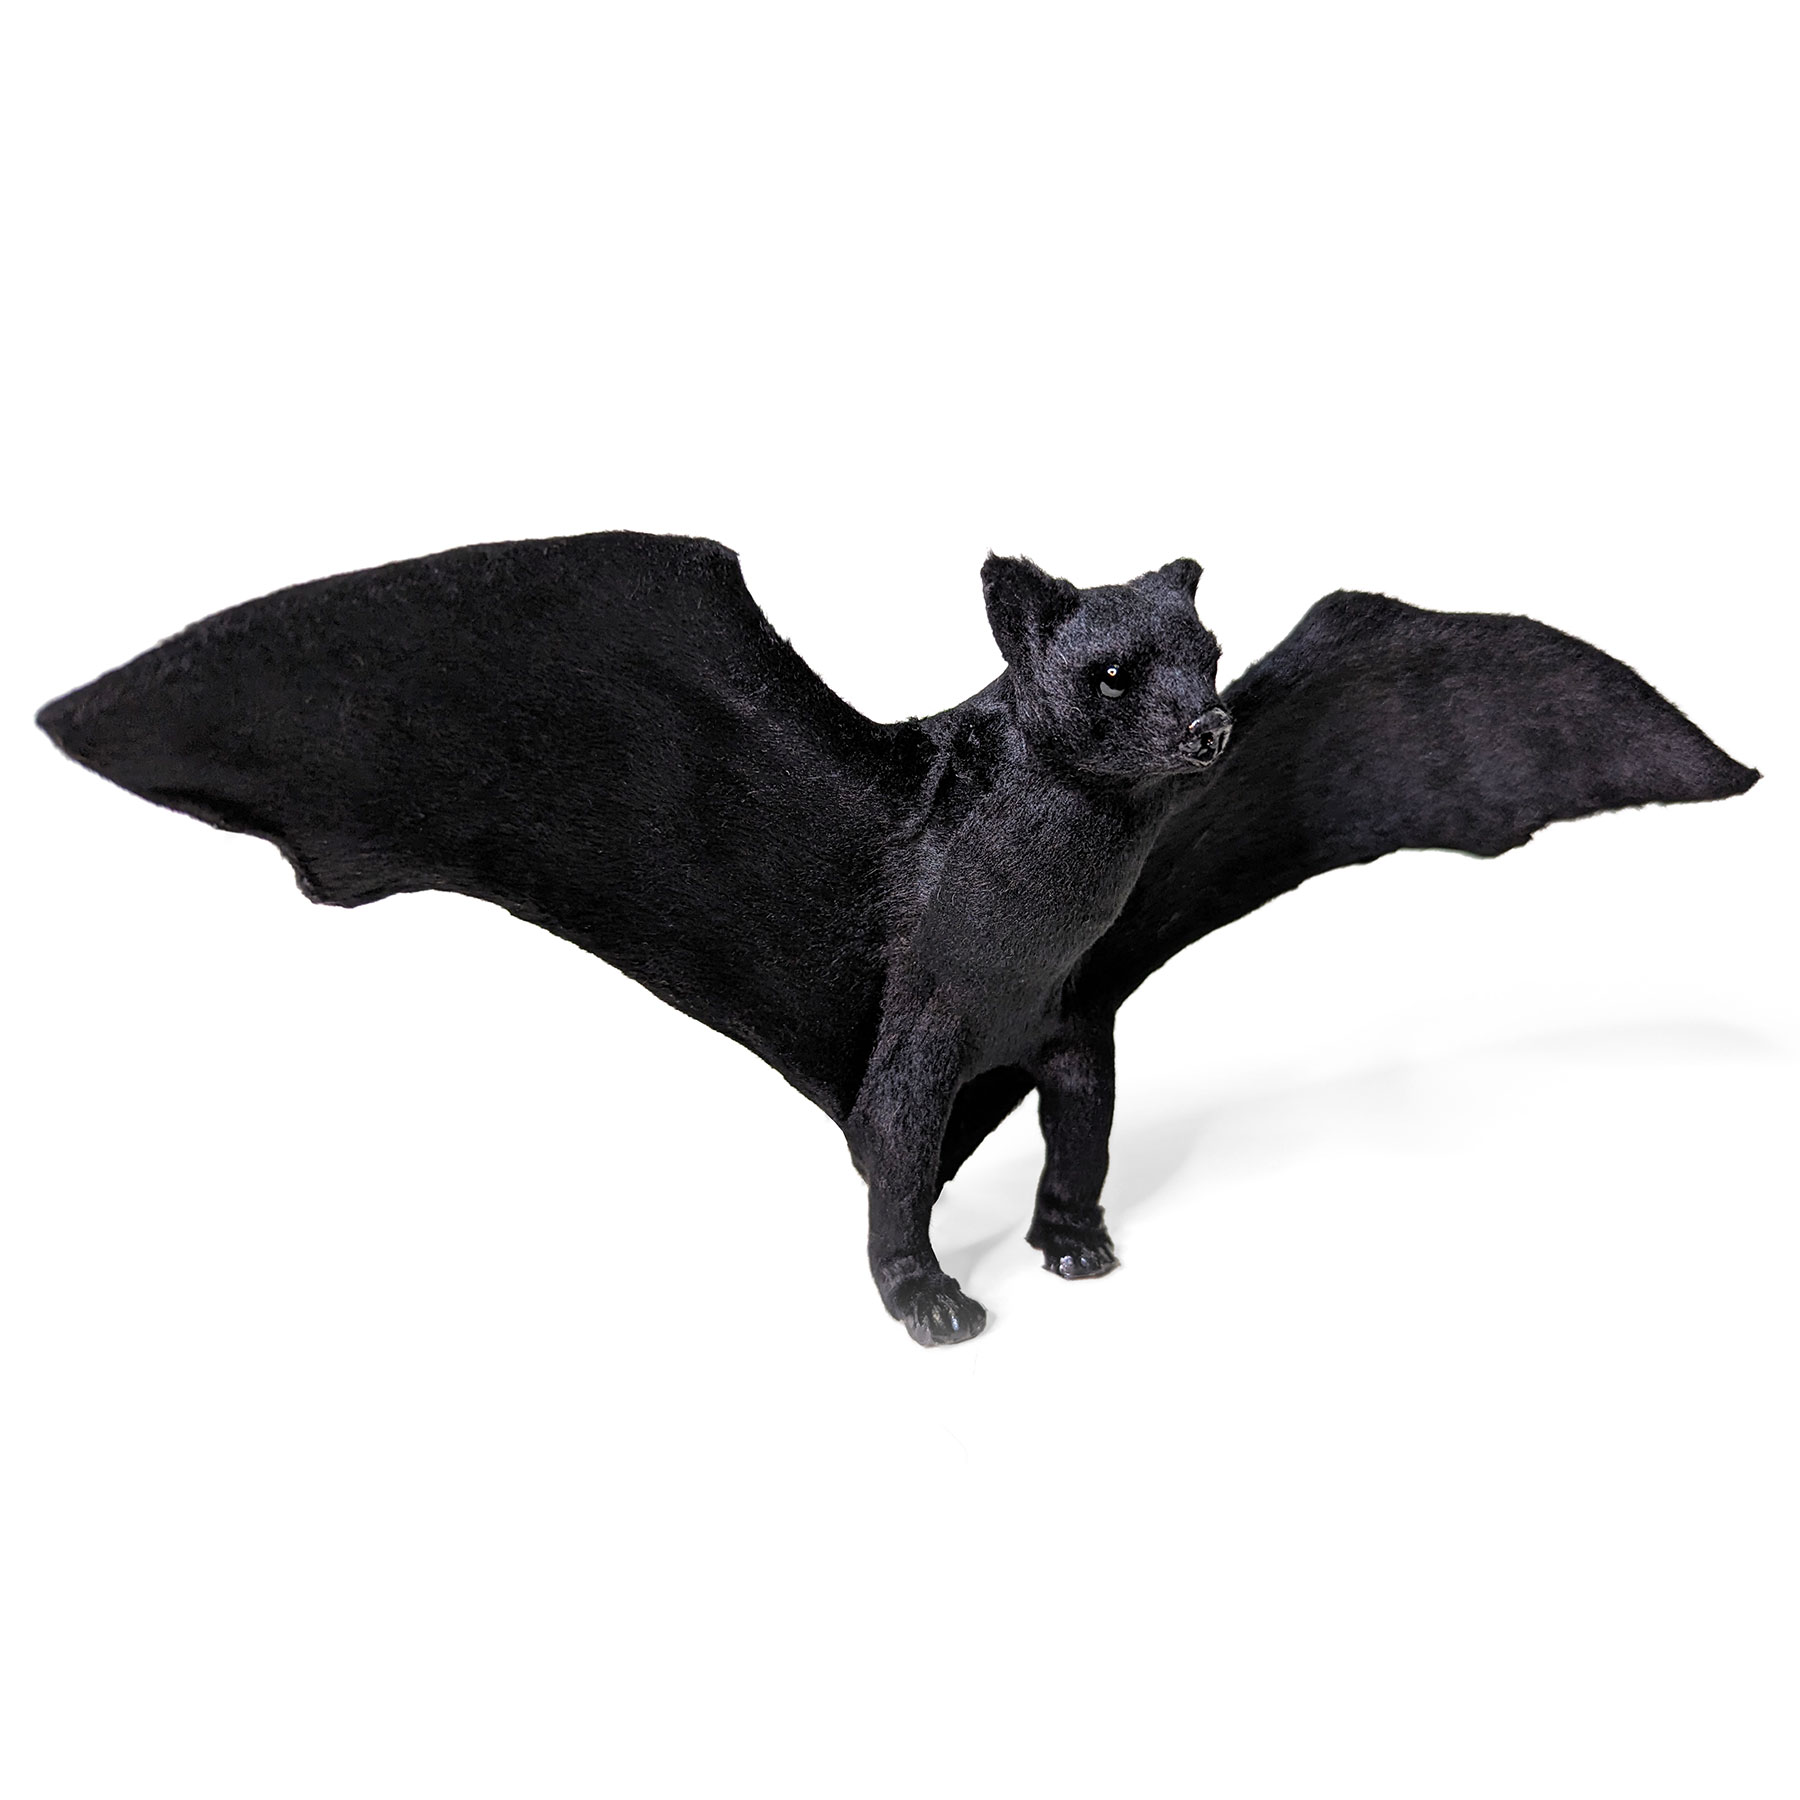 Lair Bat Figurine